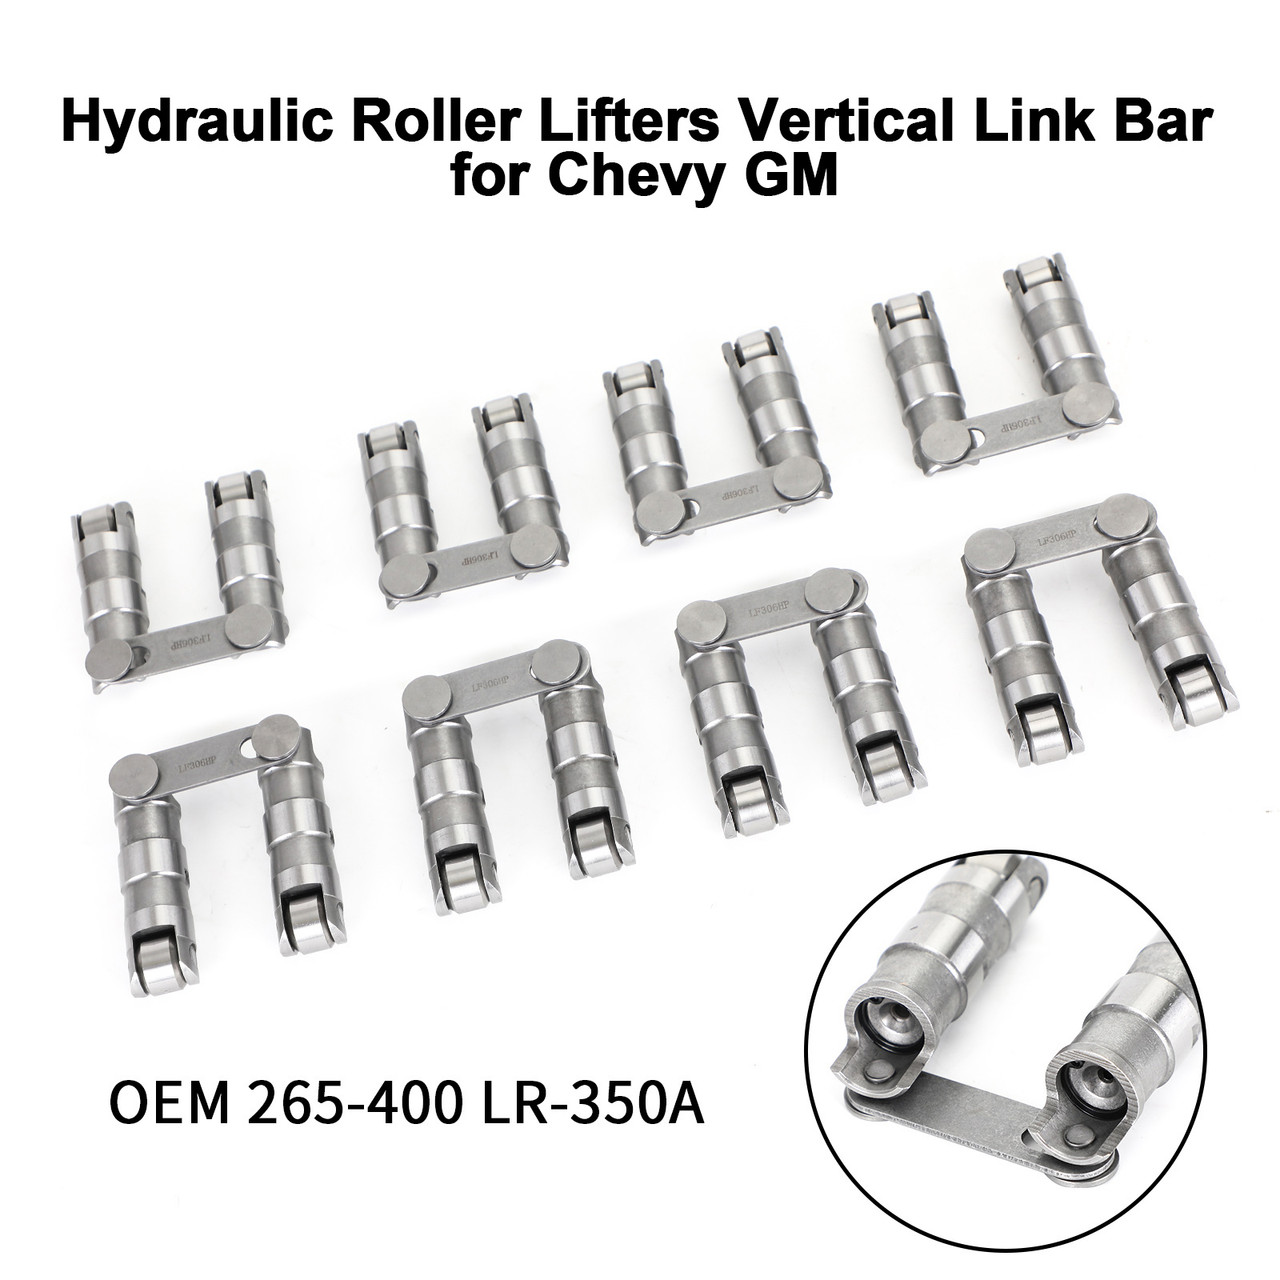 68-72 Chevrolet Bel Air Biscayne Brookwood Hydraulic Roller Lifters Vertical Link Bar LR-350A 265-400